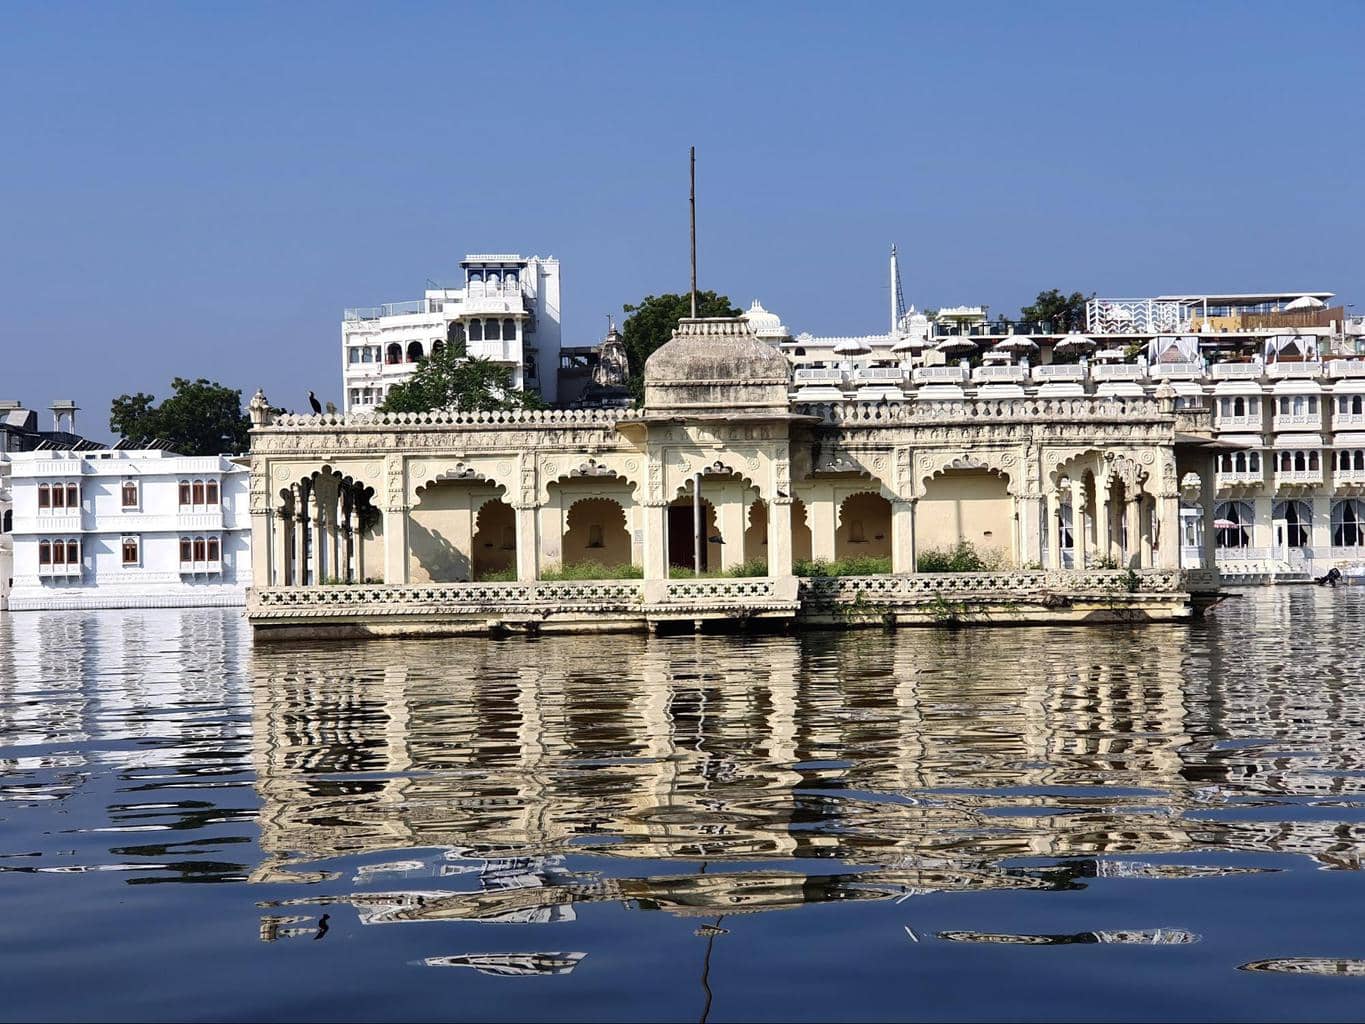 Mohan Mandir Palace on lake Pichola, Udaipur